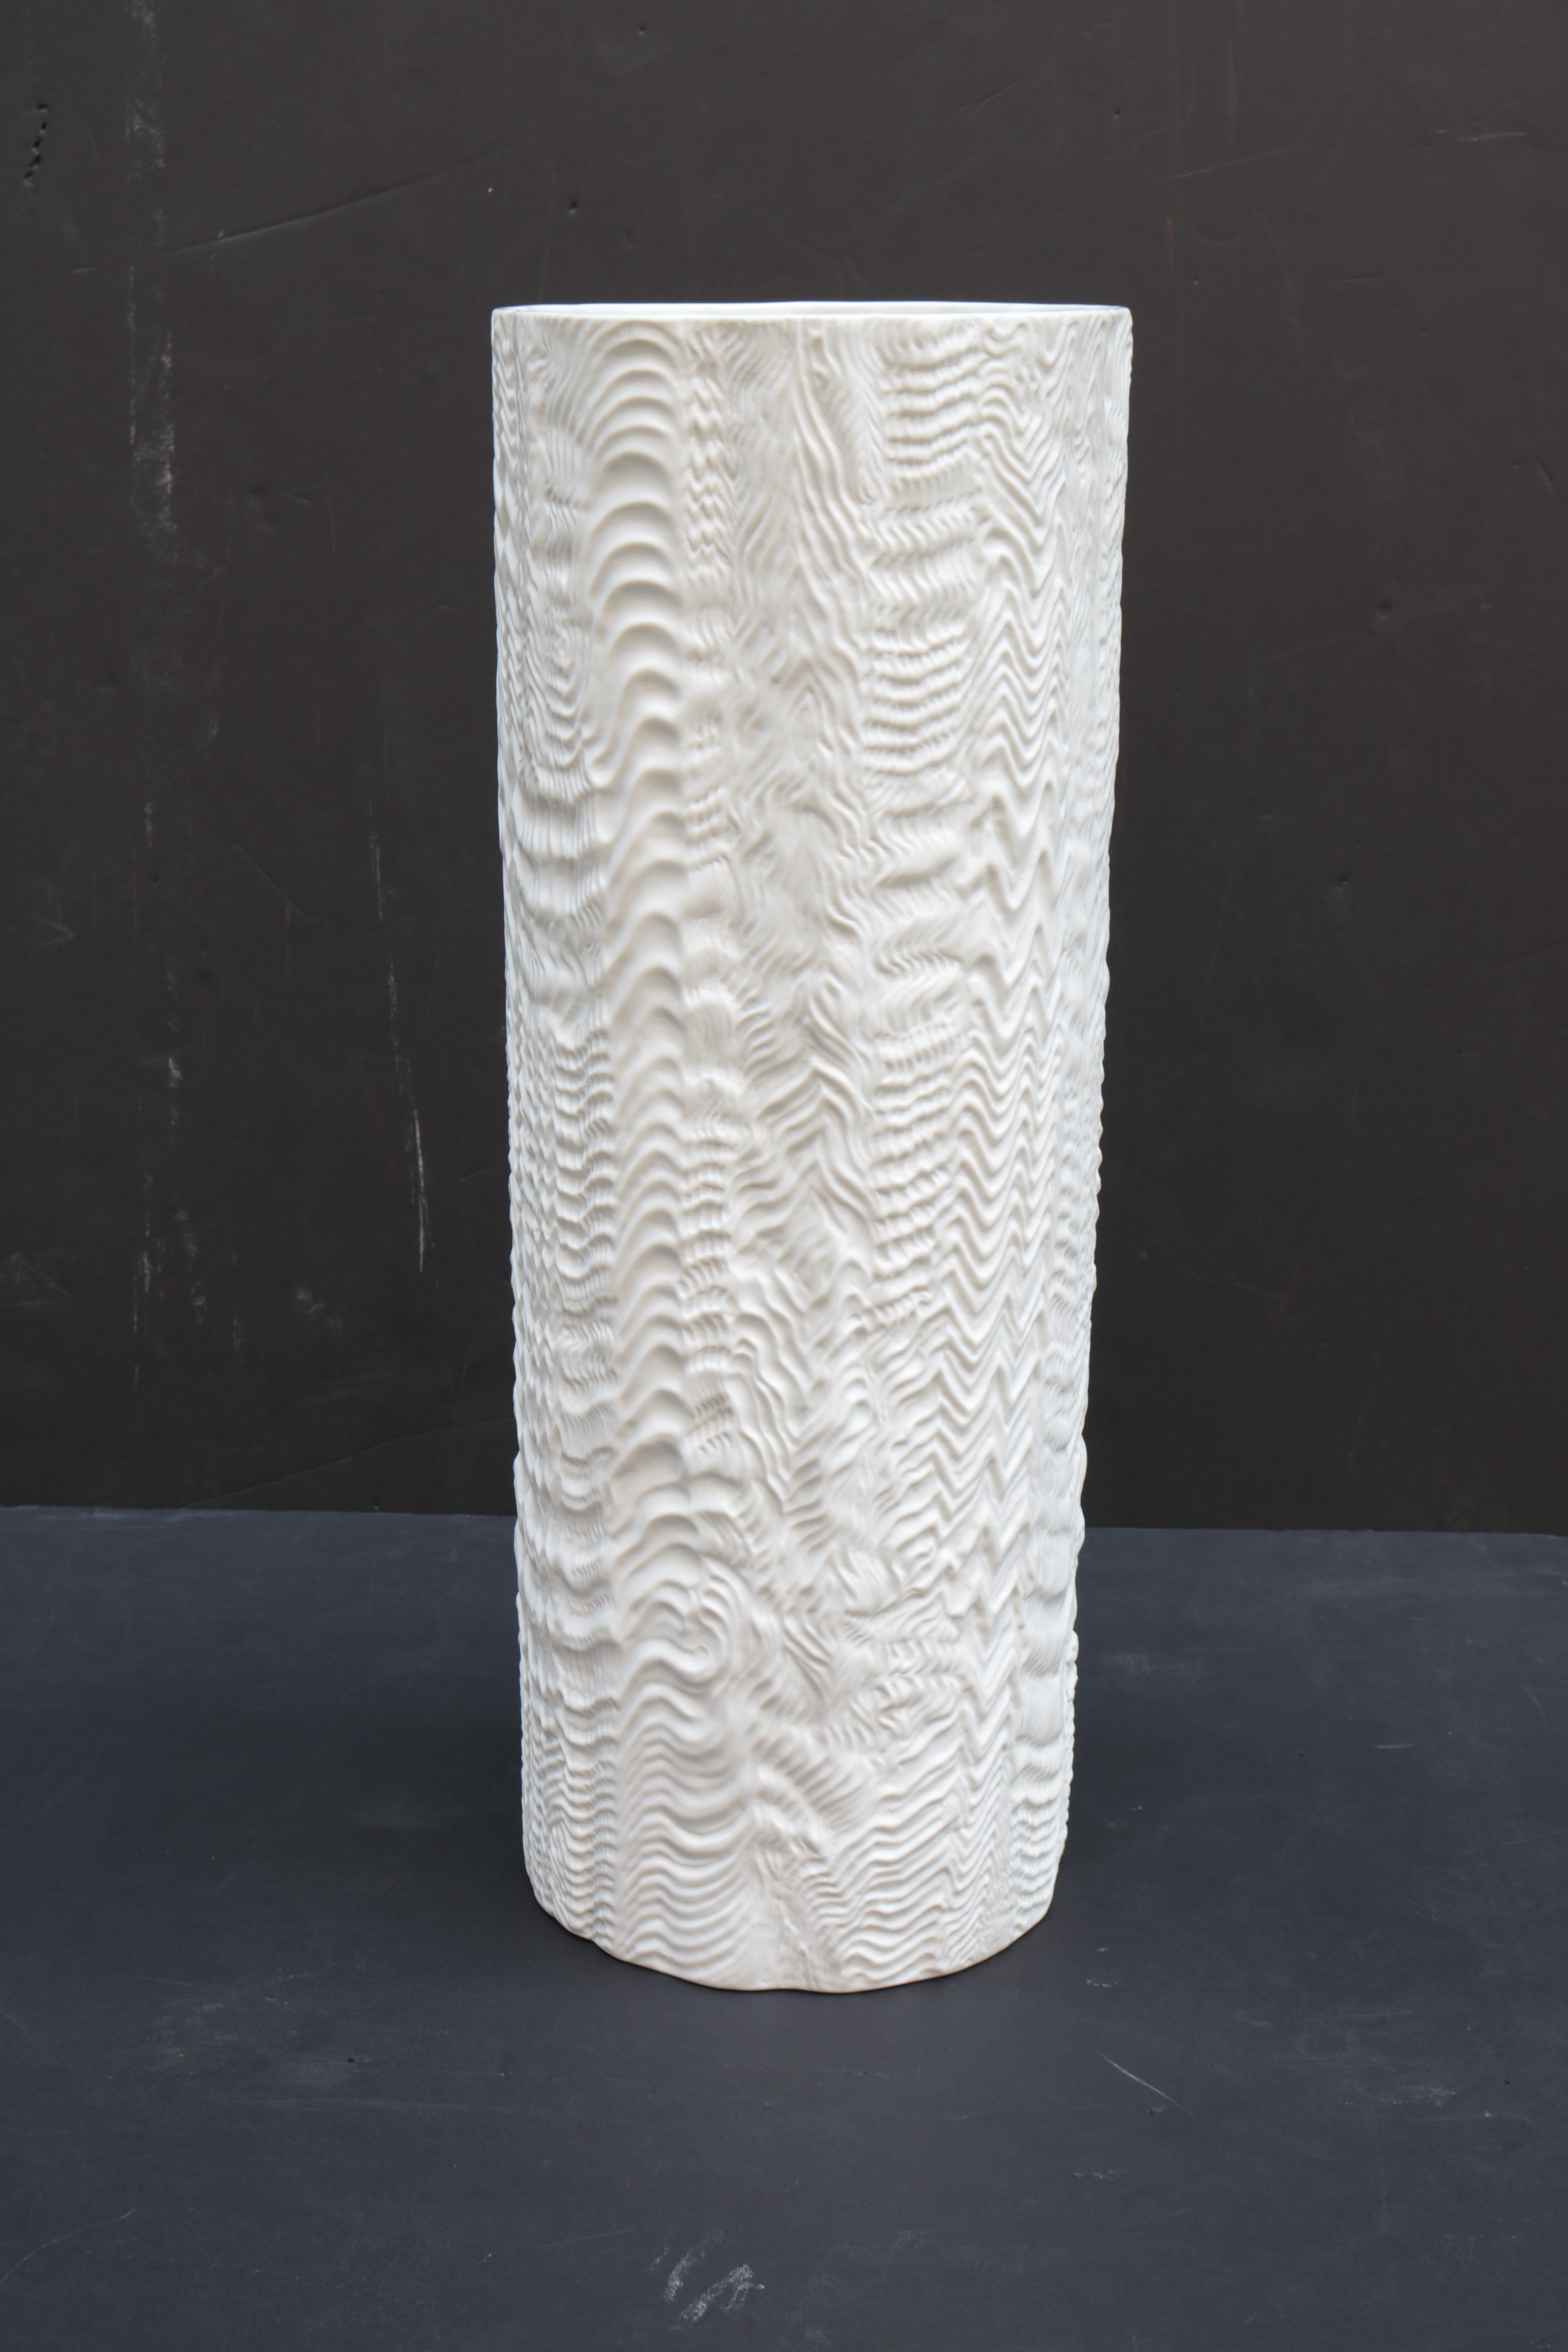 Pair of large matte white porcelain vases 
designed by Martin Freyer for the Rosenthal Studio Line. 
Signed underneath.